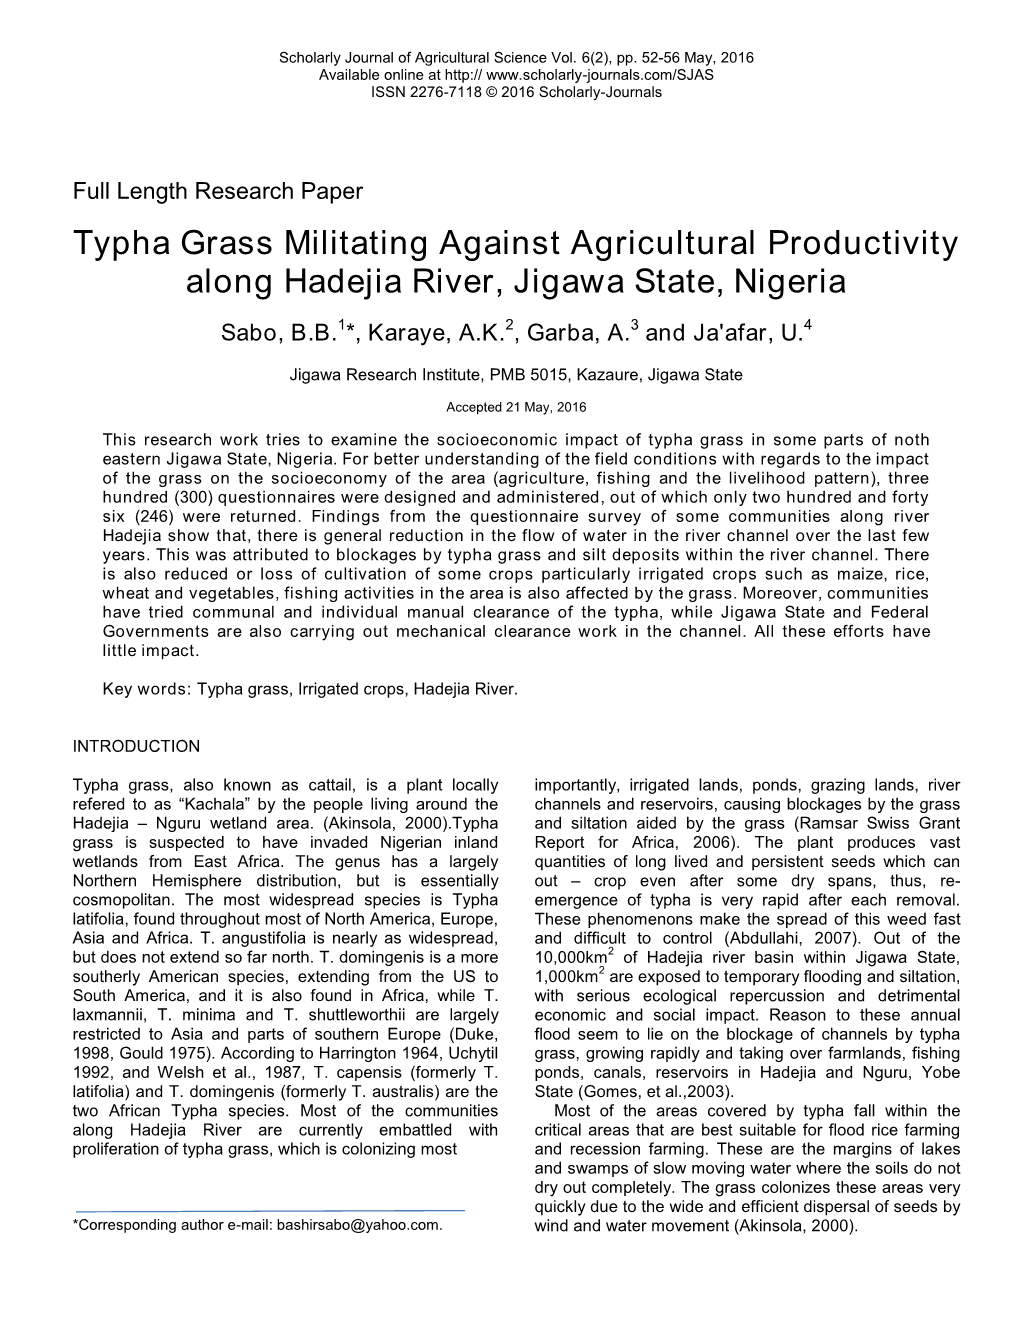 Typha Grass Militating Against Agricultural Productivity Along Hadejia River, Jigawa State, Nigeria Sabo, B.B.1*, Karaye, A.K.2, Garba, A.3 and Ja'afar, U.4